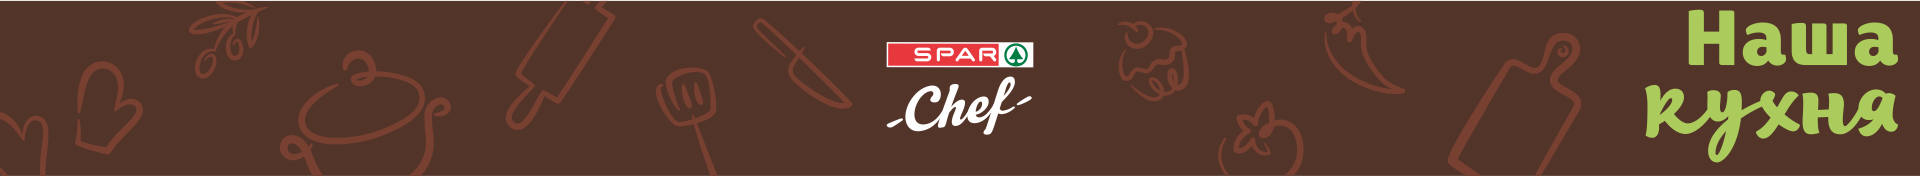 SPAR Chef